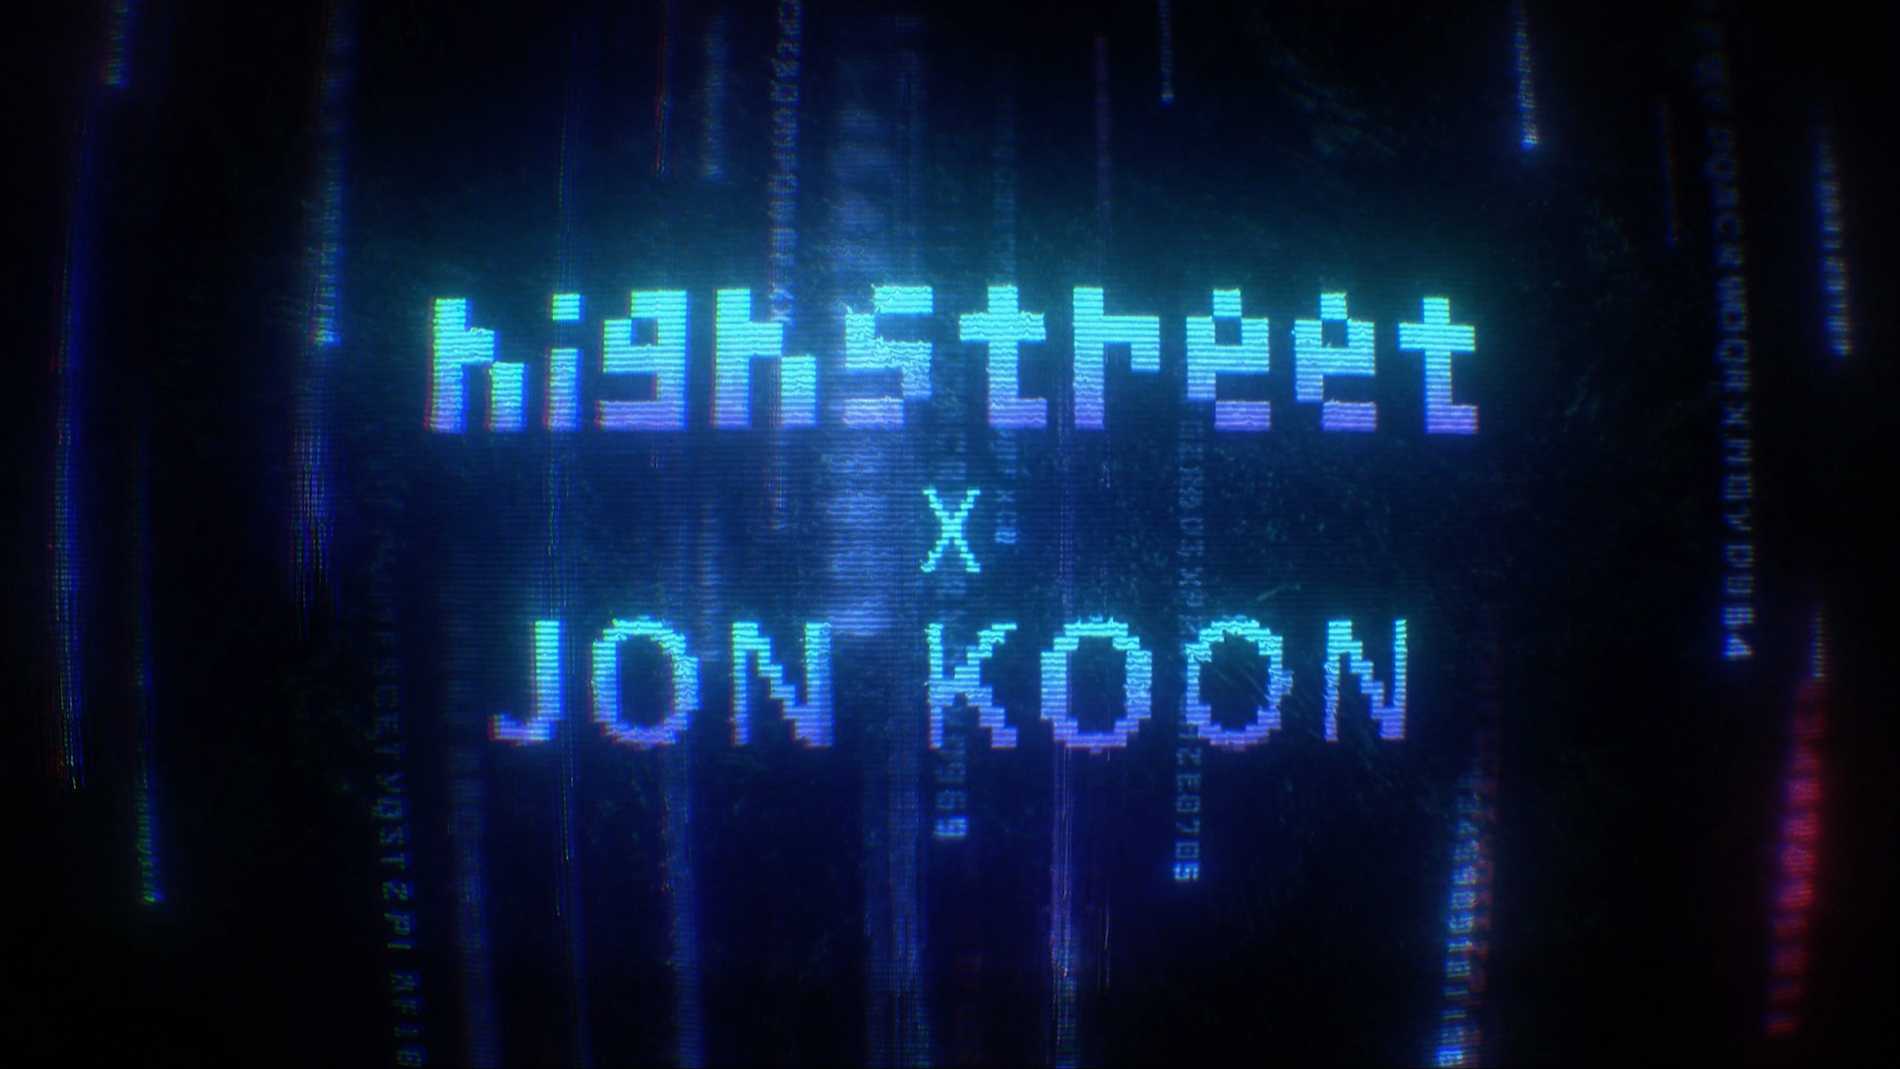 High Street_JON KOON_设计师品牌时尚创意短片